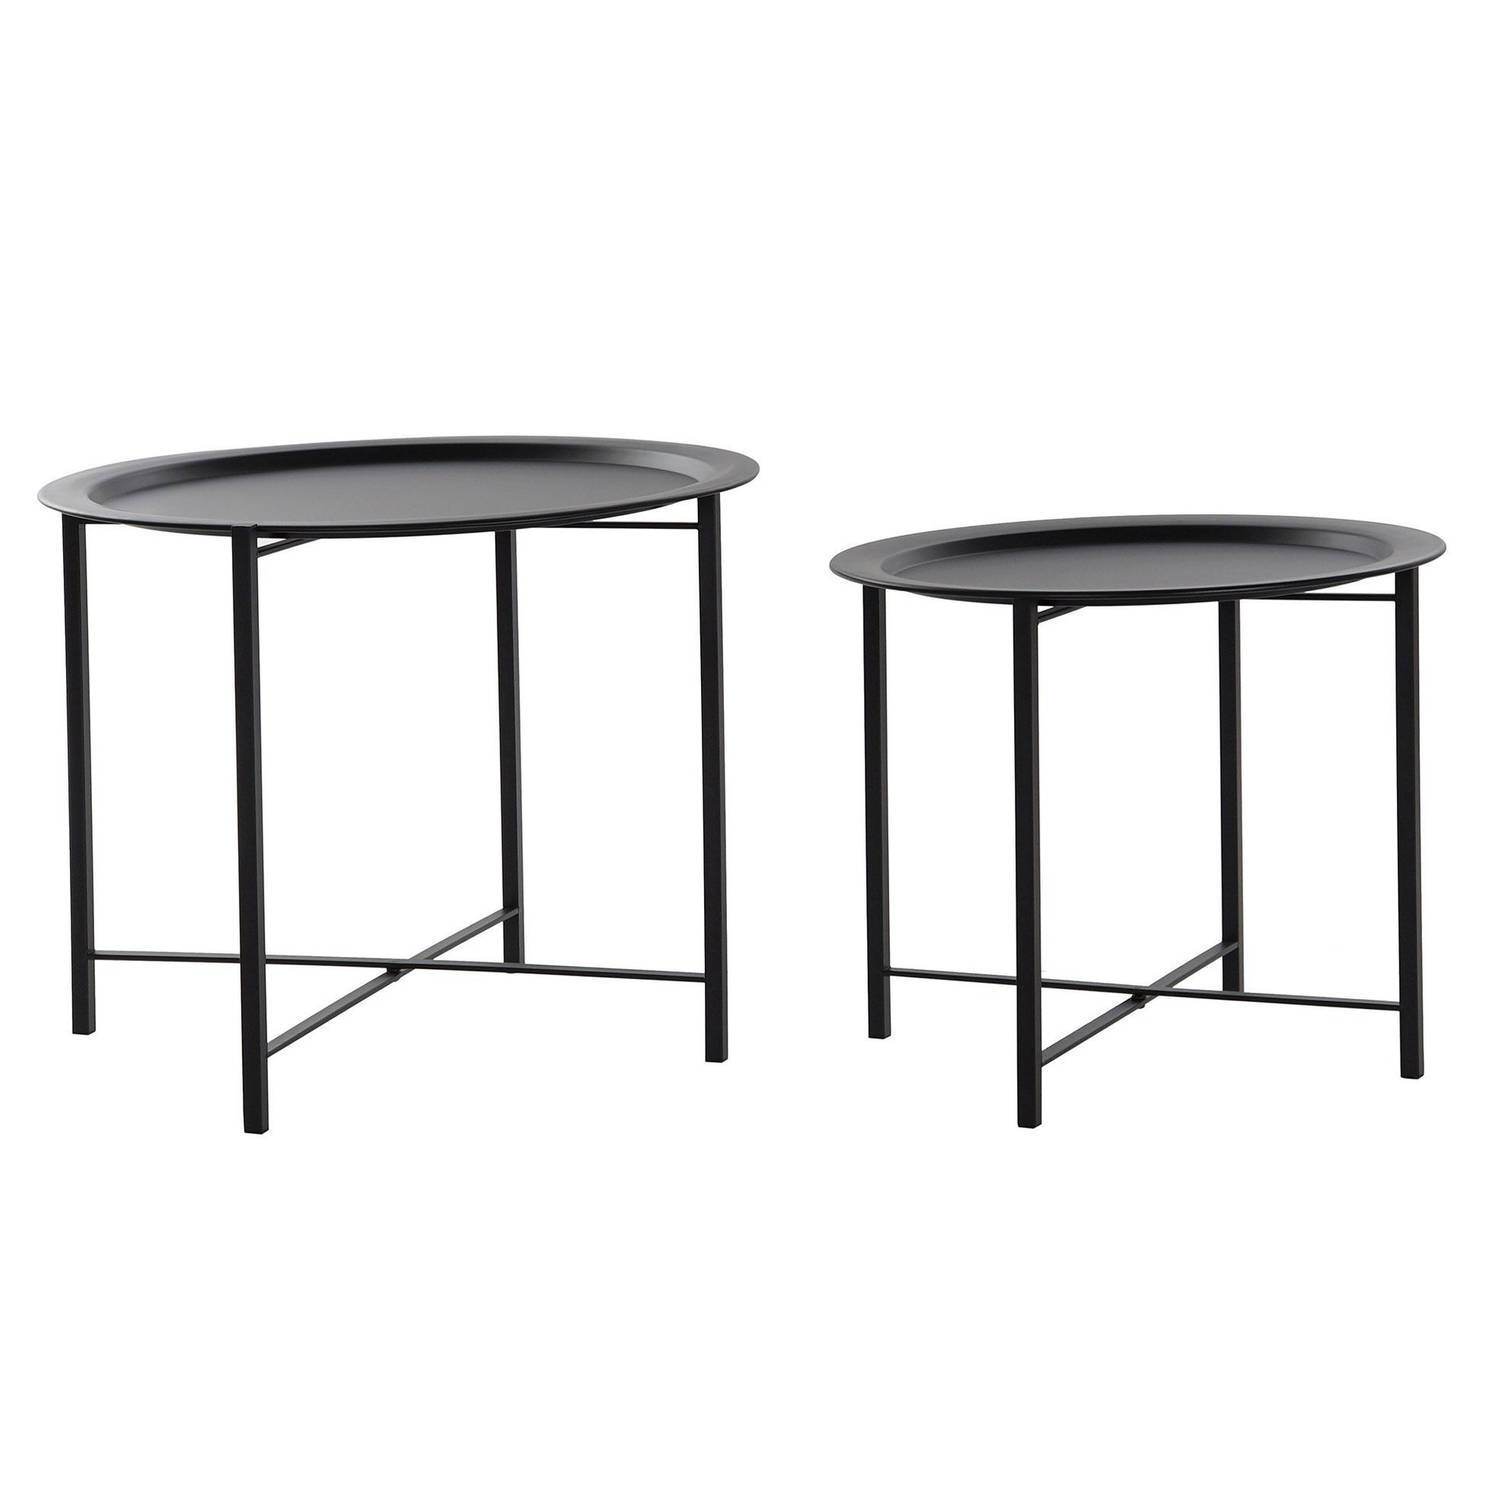 Items Set van 2x bijzettafels rond metaal zwart 44/49 cm - Home Deco meubels en tafels